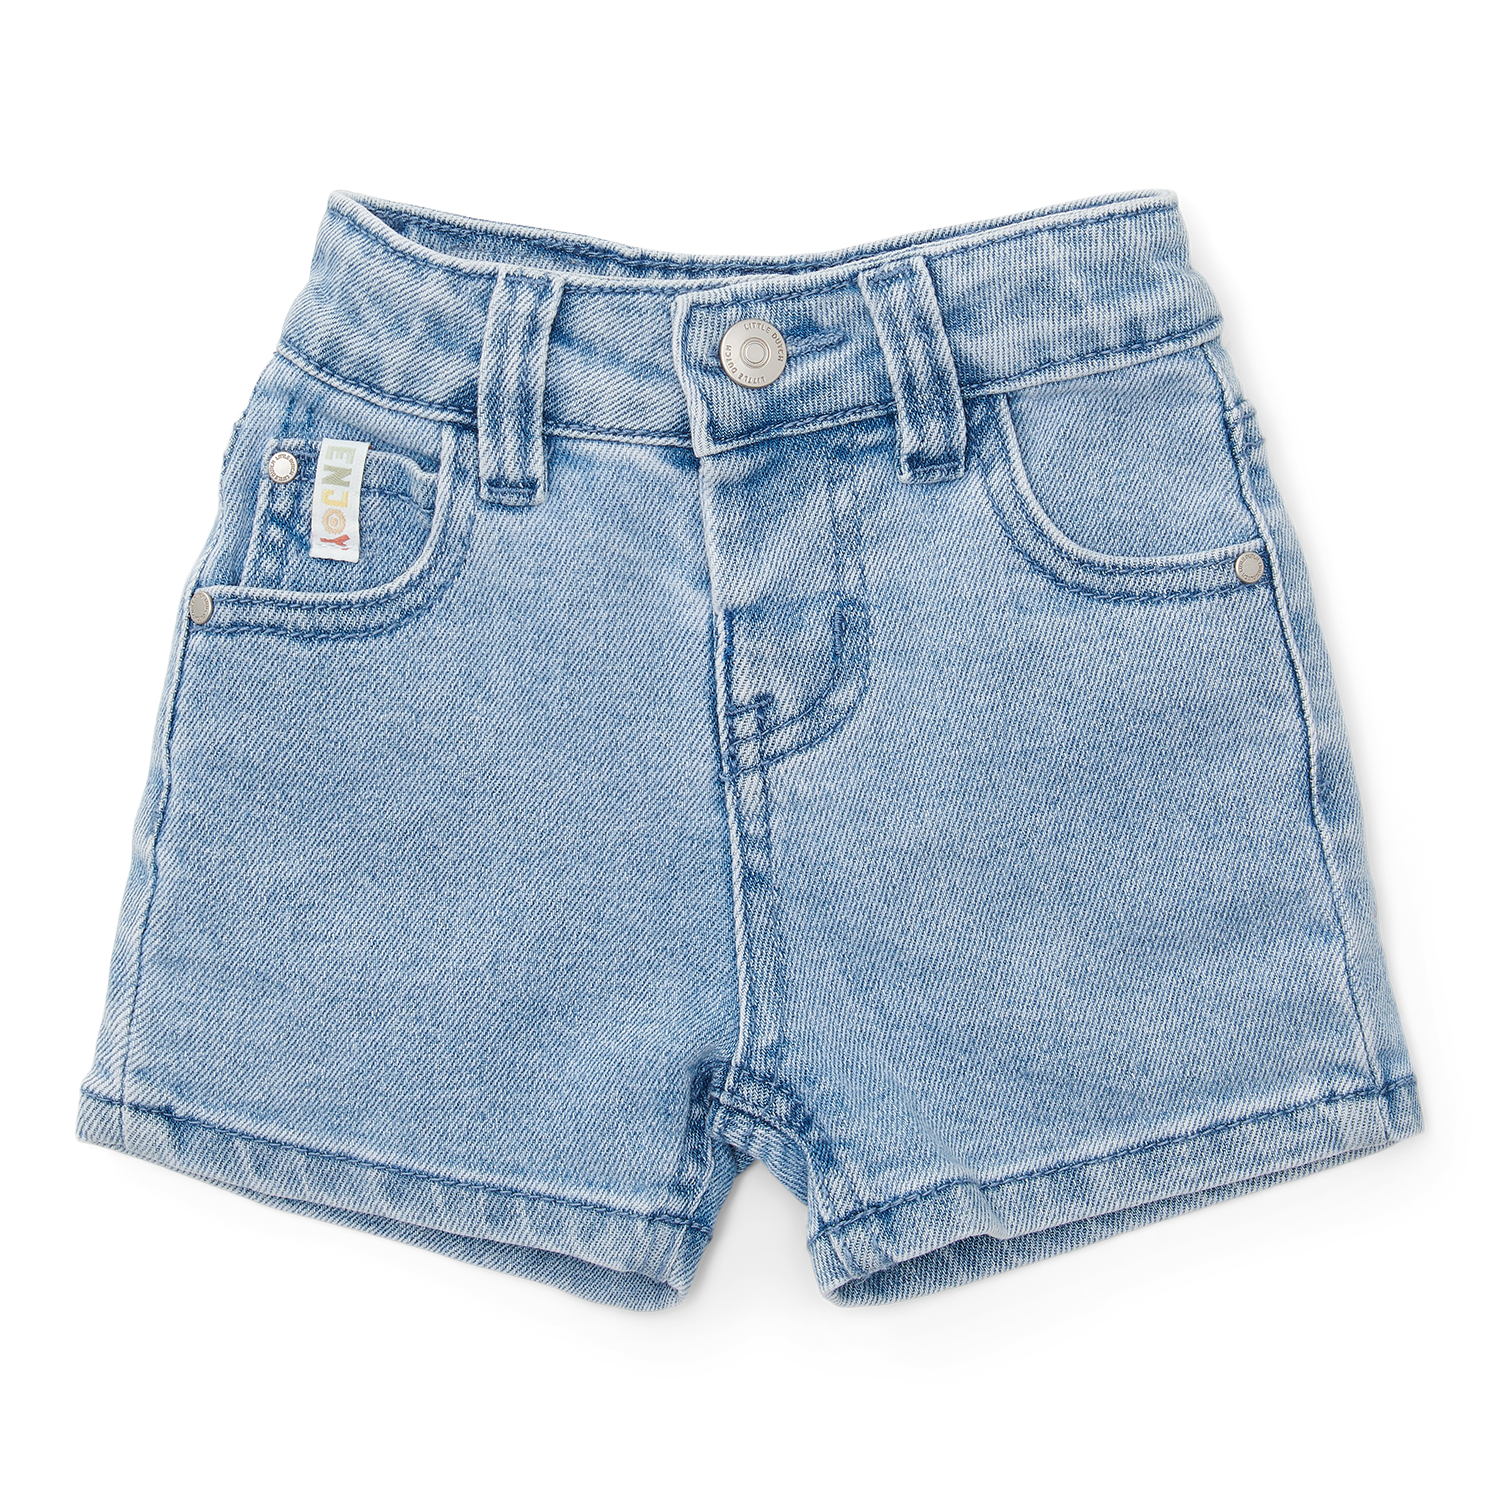 Kurze Hose / Shorts Denim mit Taschen Little Farm jeans (Gr. 98)